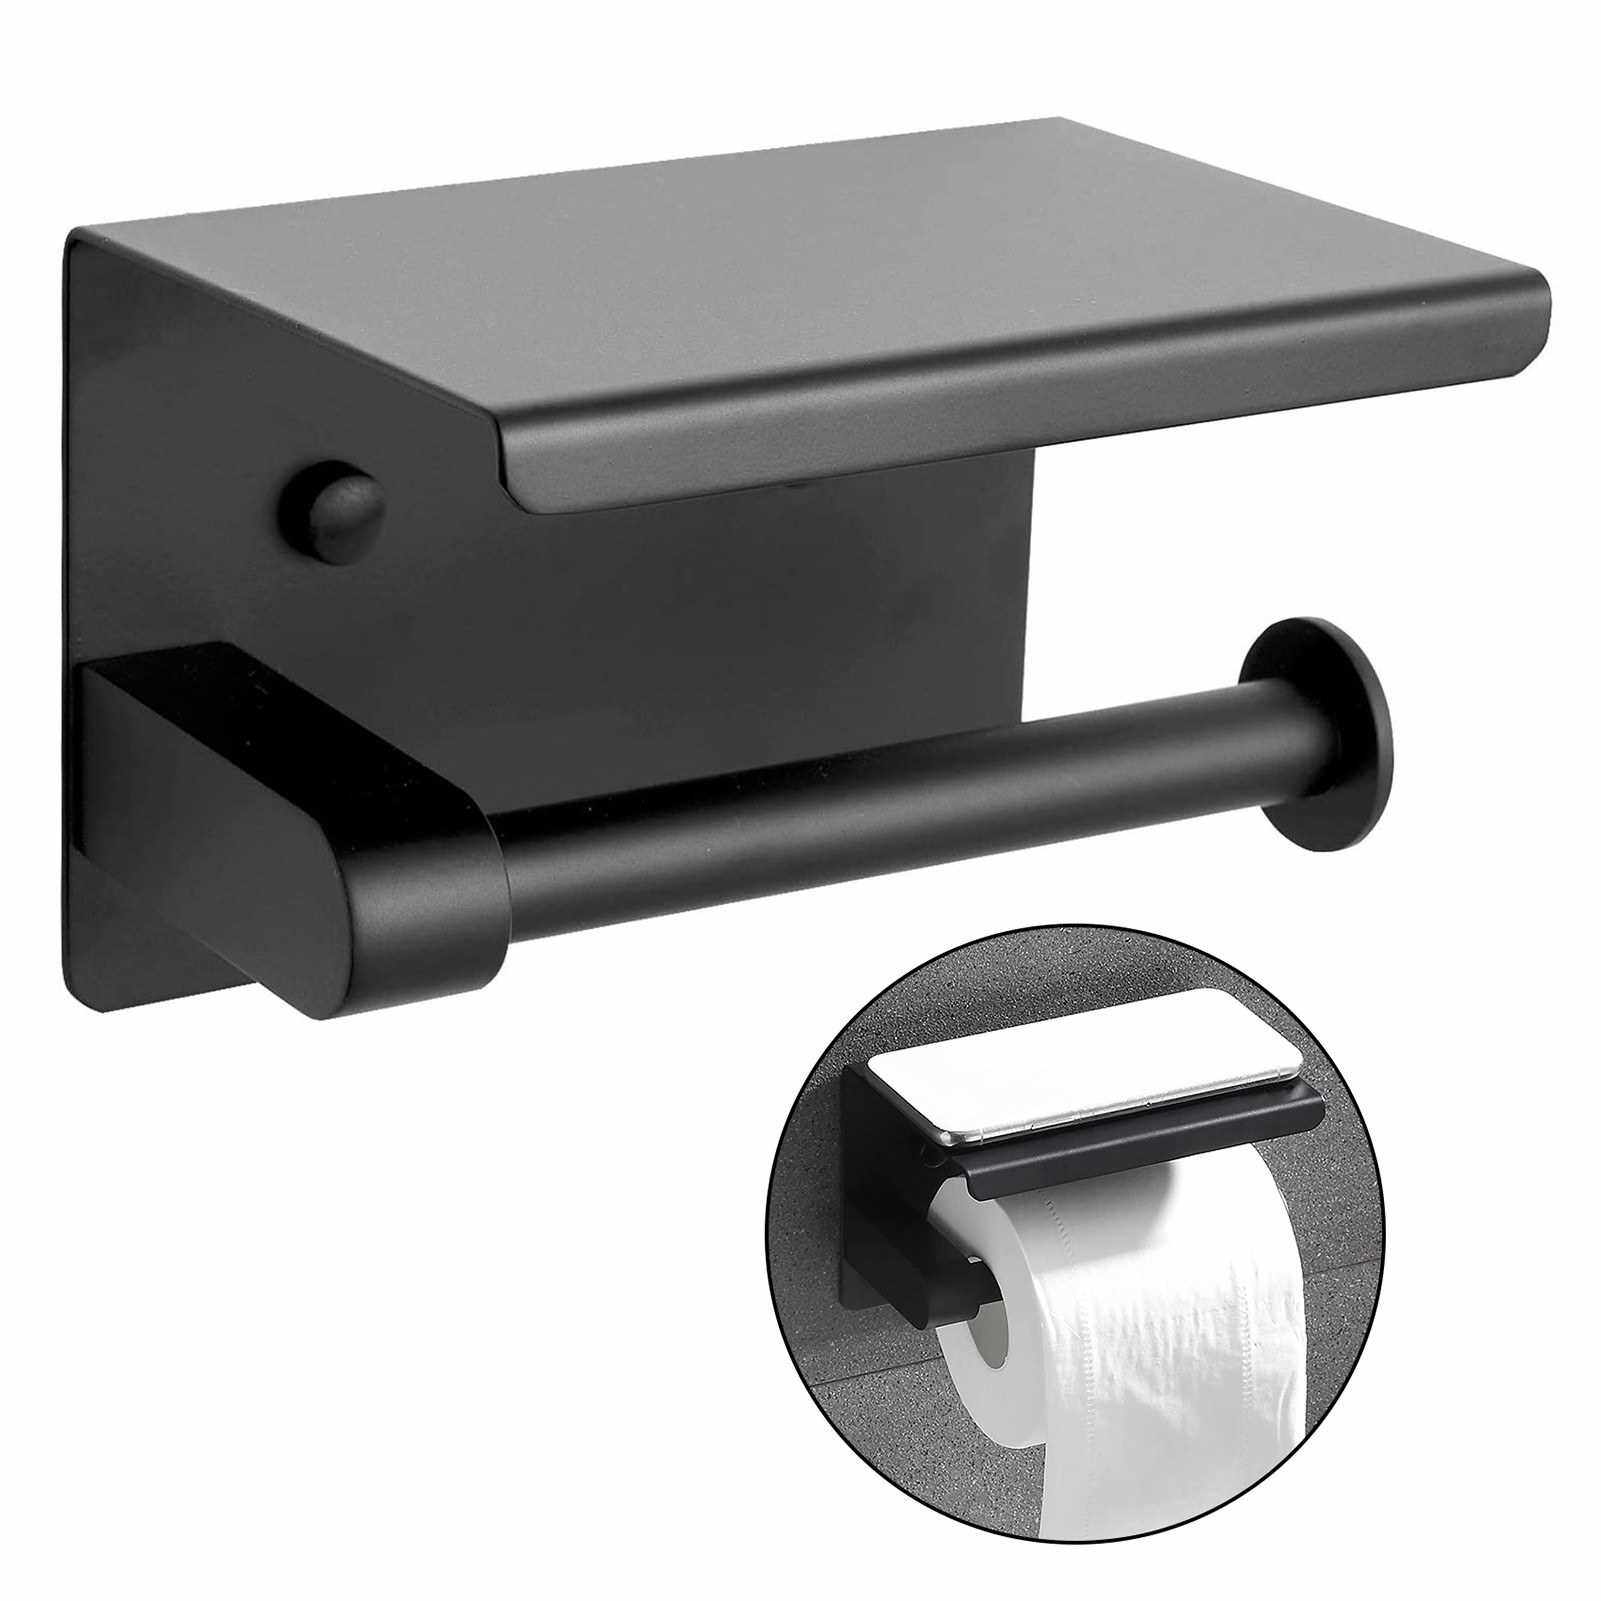 Matte Black Tissue Roll Dispenser Storage Stainless Steel Paper Holder for Bathroom Single Roll Toilet Paper Holder Wall Mount with Shelf (Black)